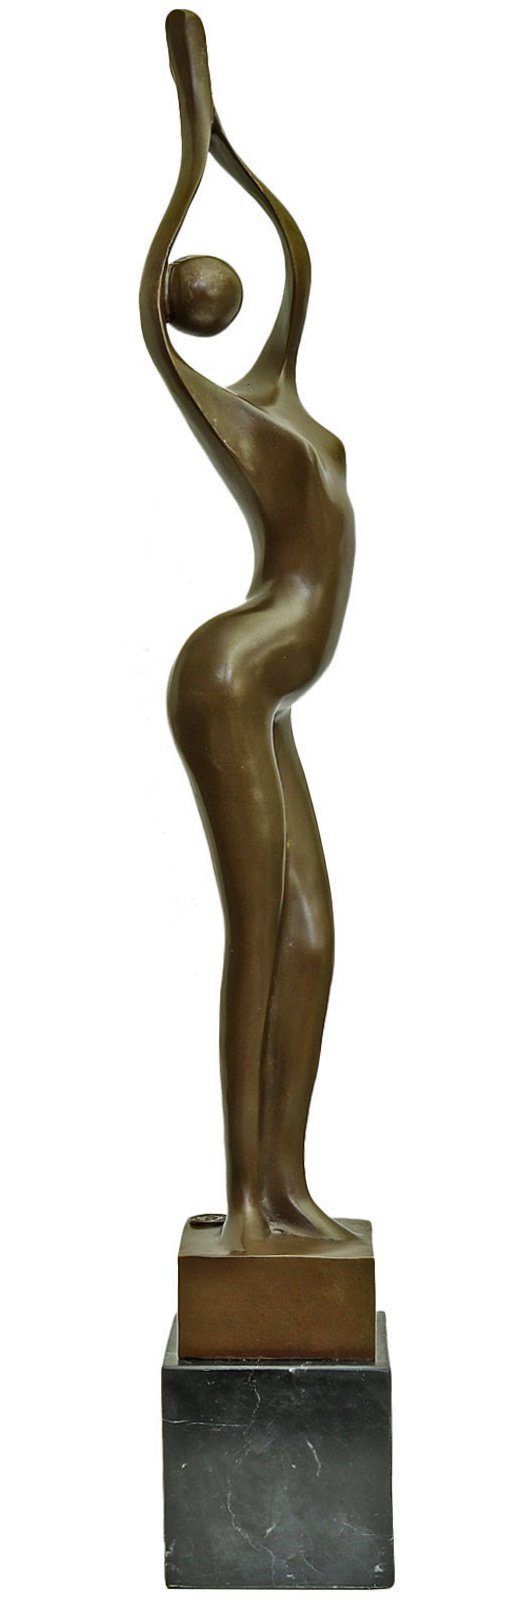 Aubaho Antik-Stil Bronzeskulptur Kunst Erotik im Bronze Figur Skulptur erotische Statu